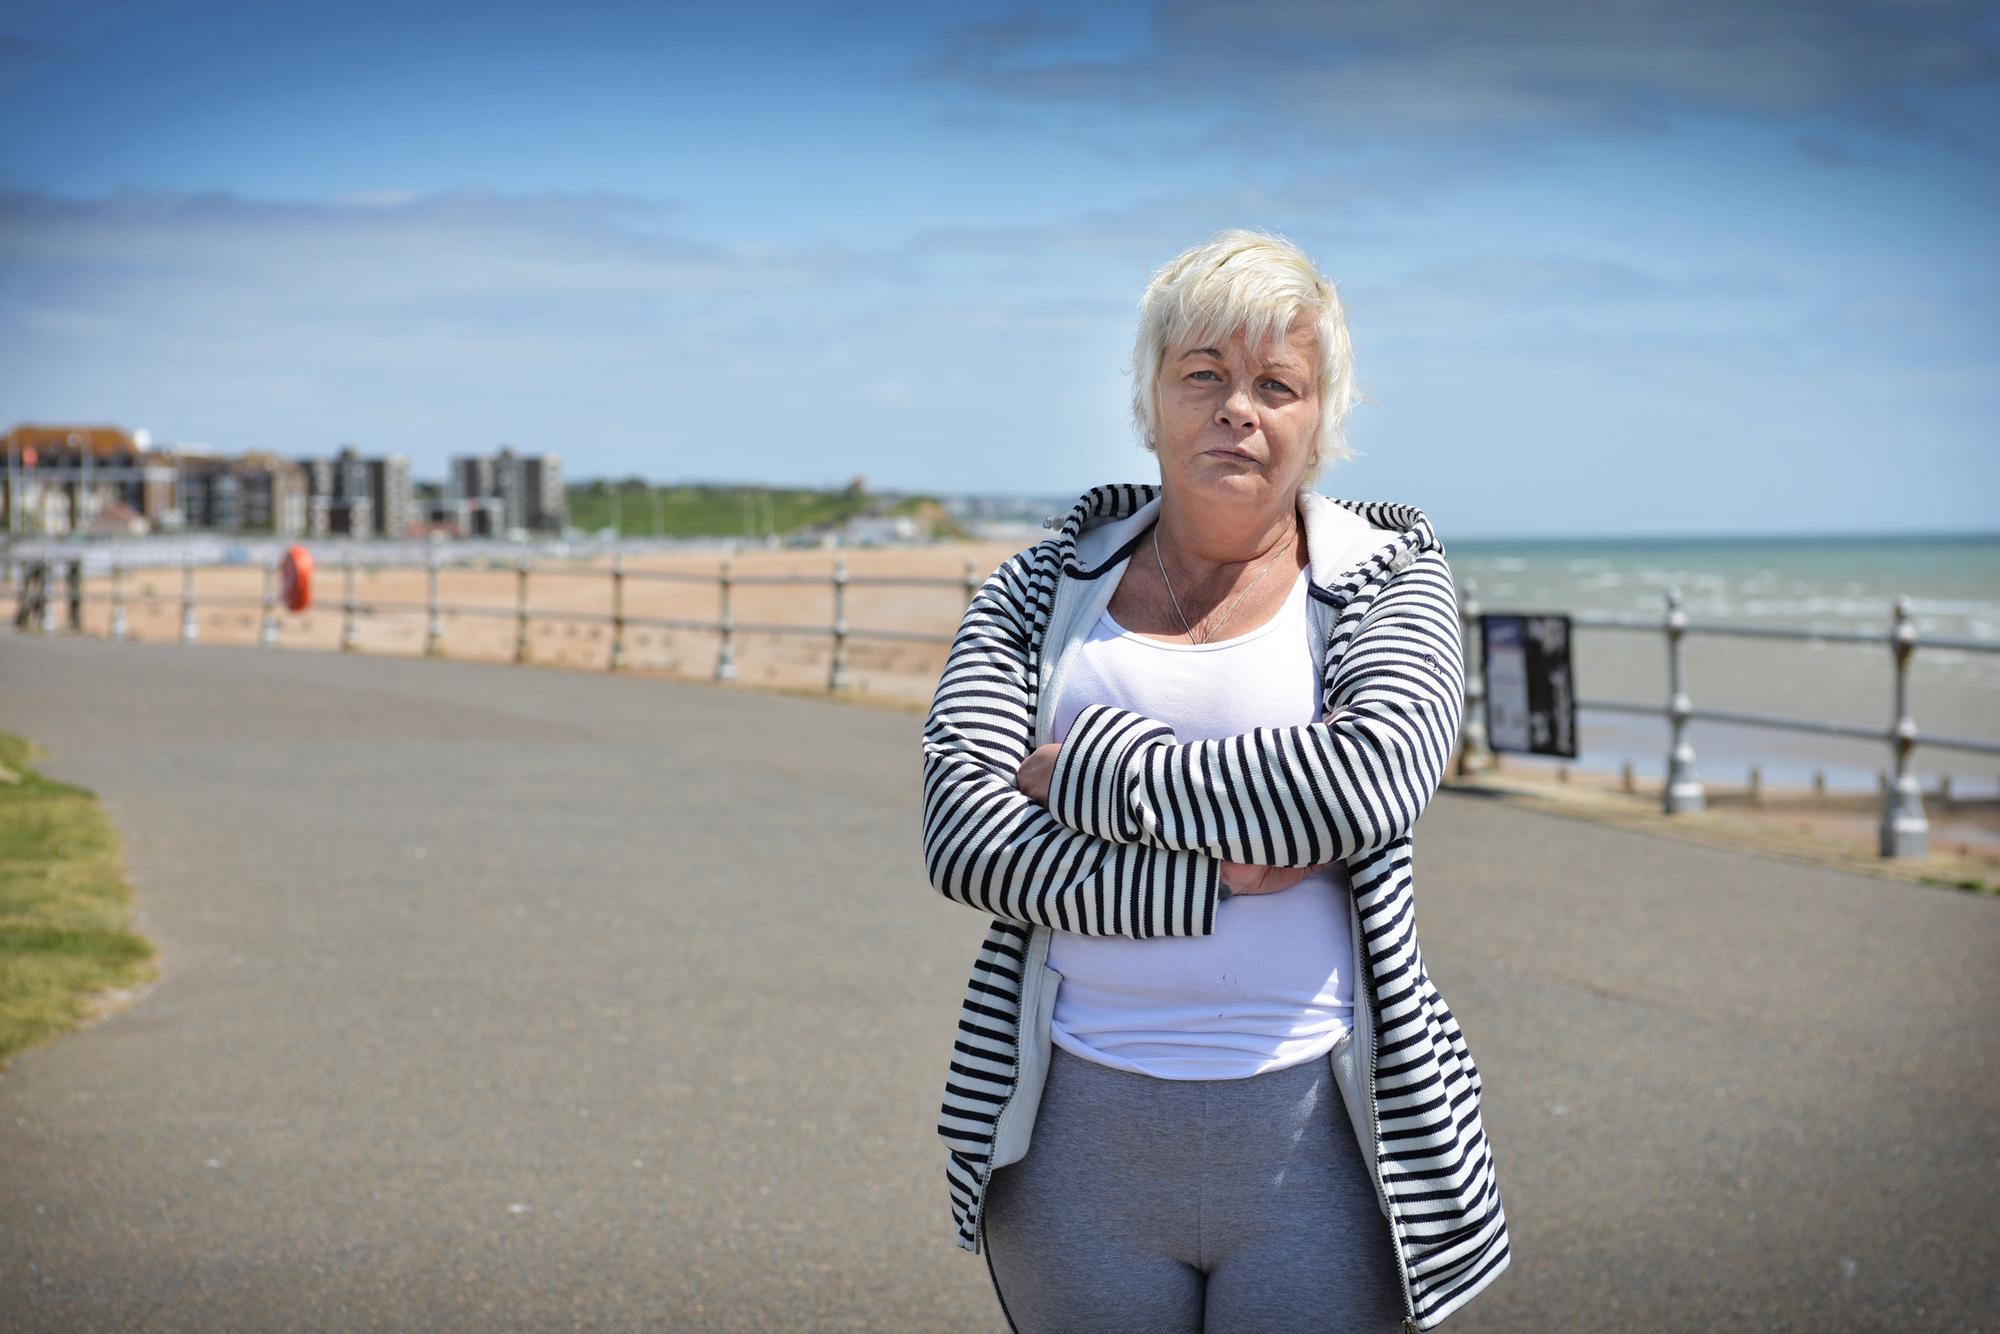 Bexhill woman's anger over £100 cigarette butt fine